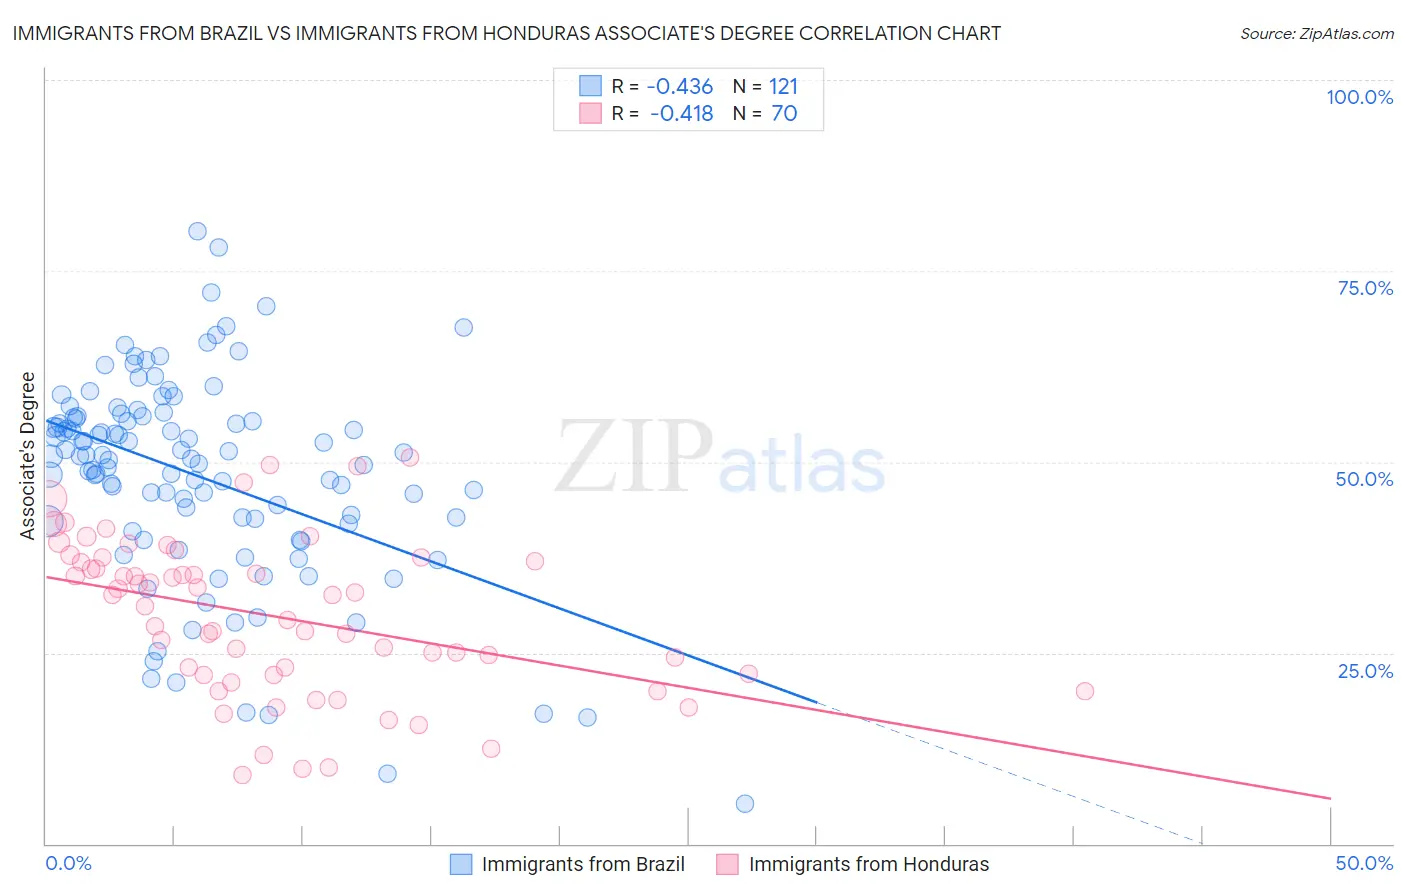 Immigrants from Brazil vs Immigrants from Honduras Associate's Degree